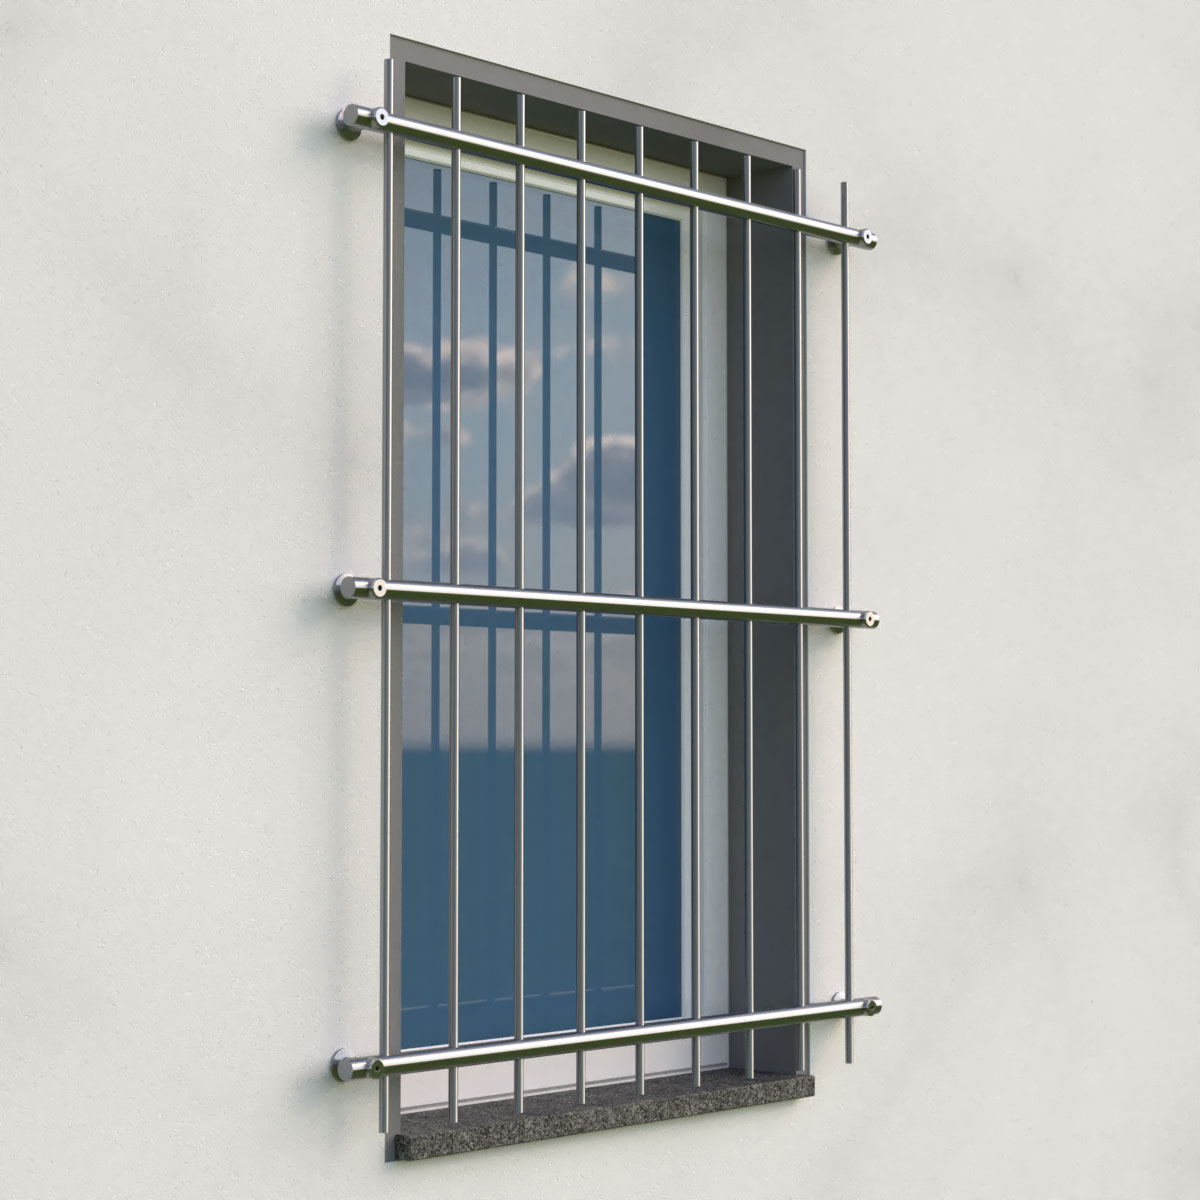 Fenstergitter modern in Edelstahl - Montage vor Fenster-Laibung